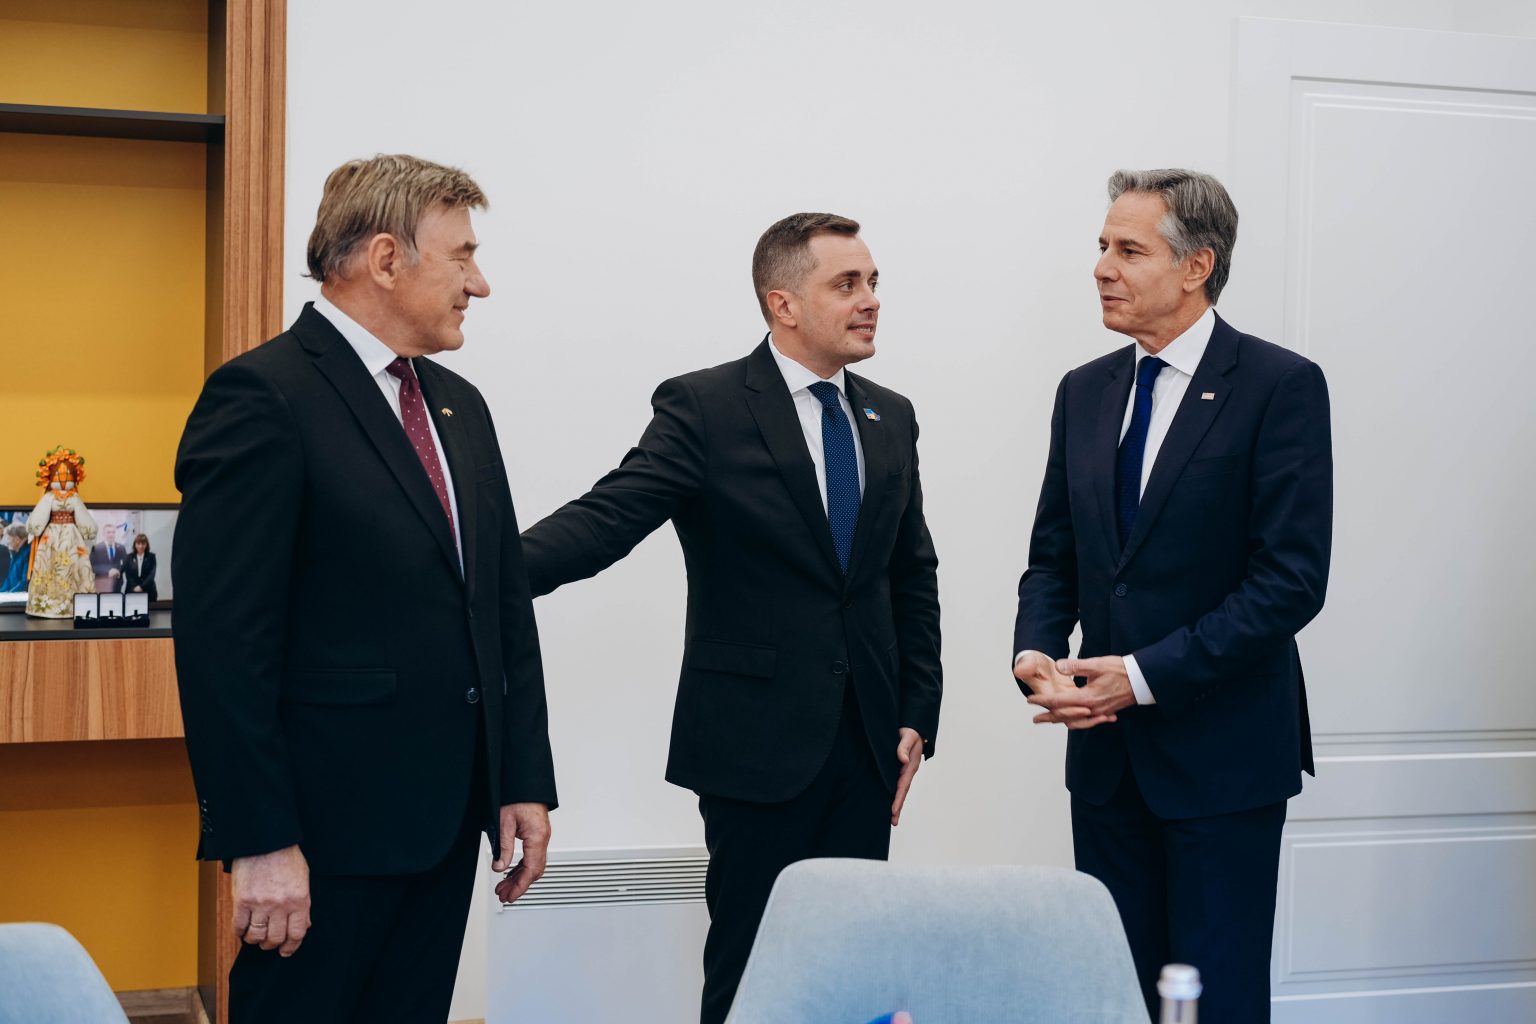 Meeting of three men in suits